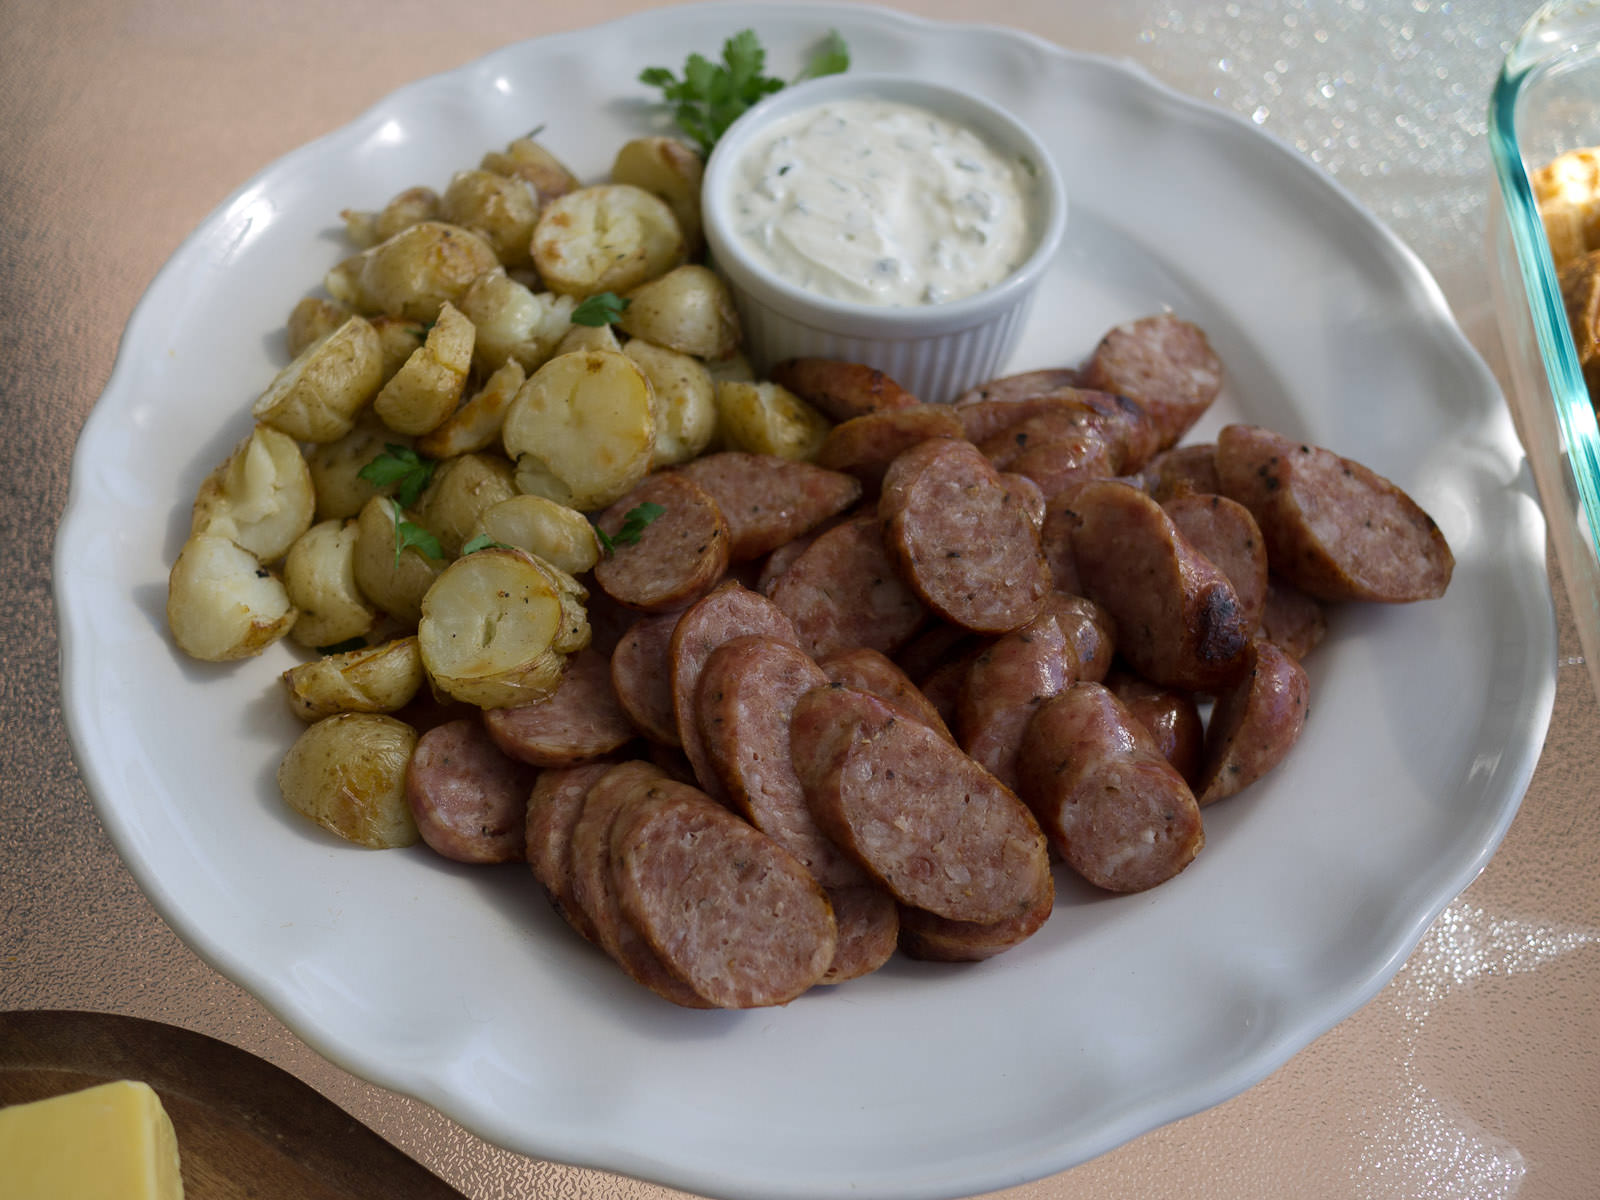 Sausage, potatoes and dip